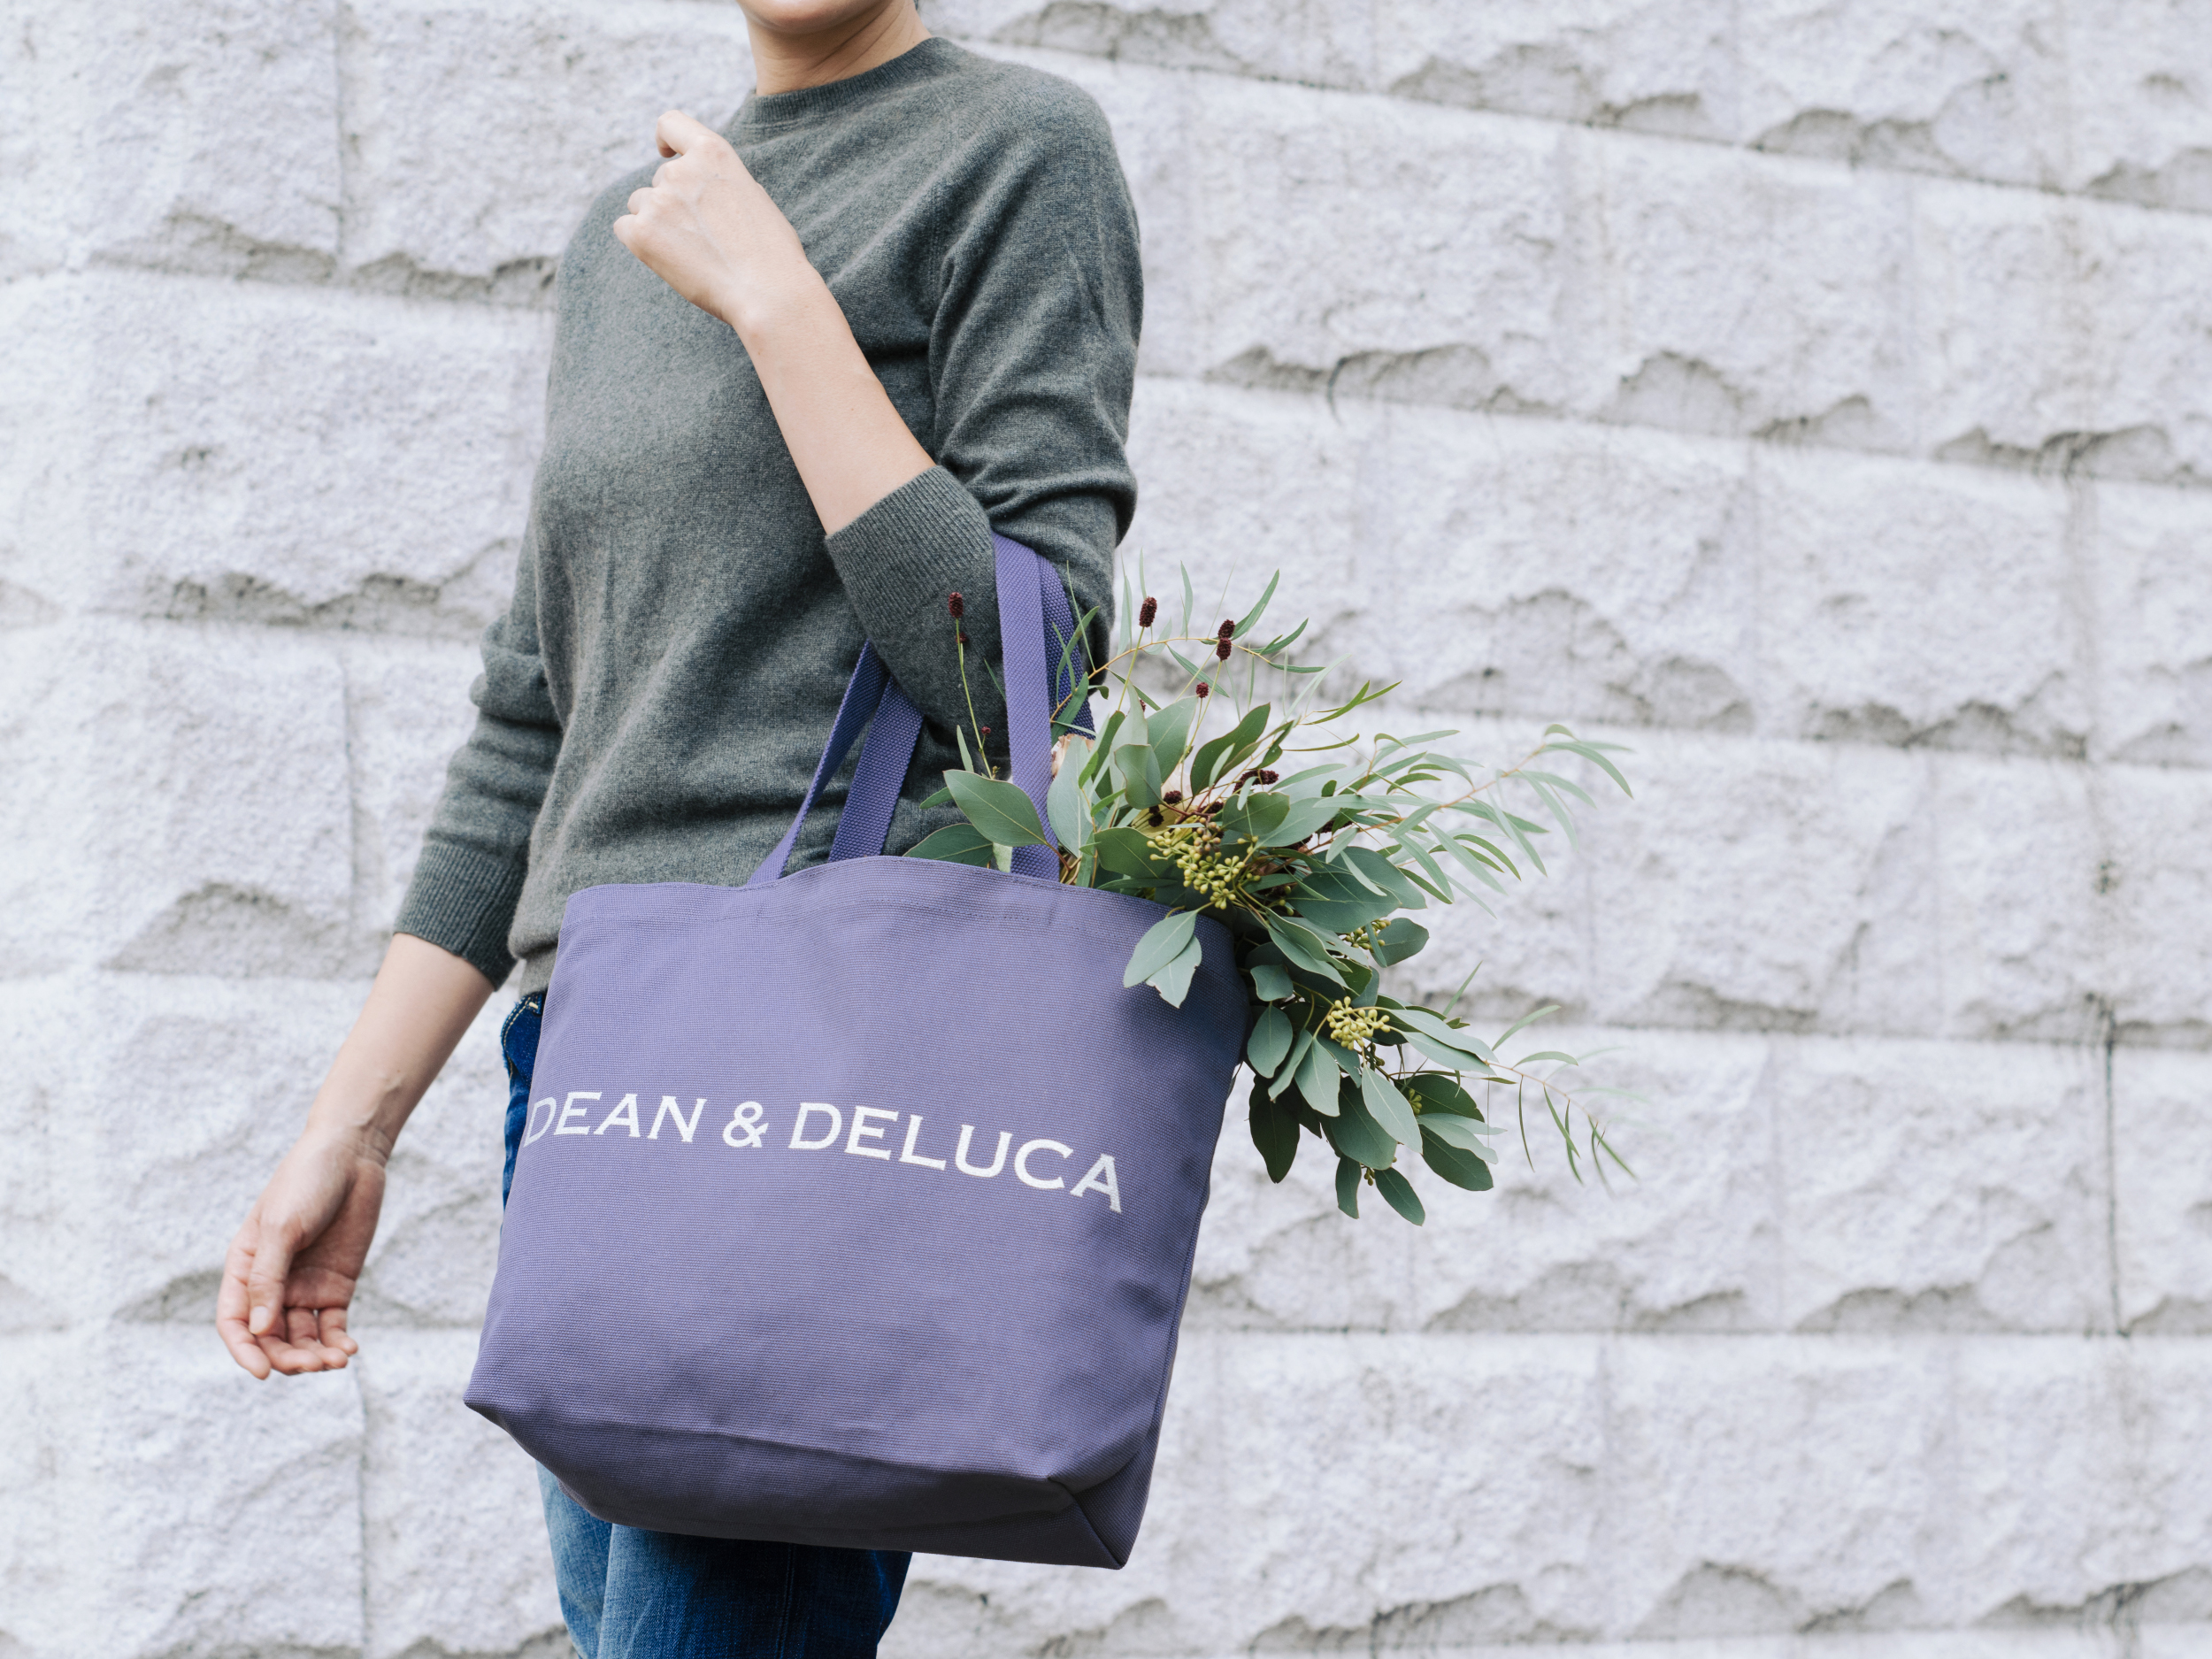 Dean Deluca 11月1日 火 A Bag For Happiness 22 チャリティトートバッグが限定数量で発売 株式会社ウェルカムのプレスリリース